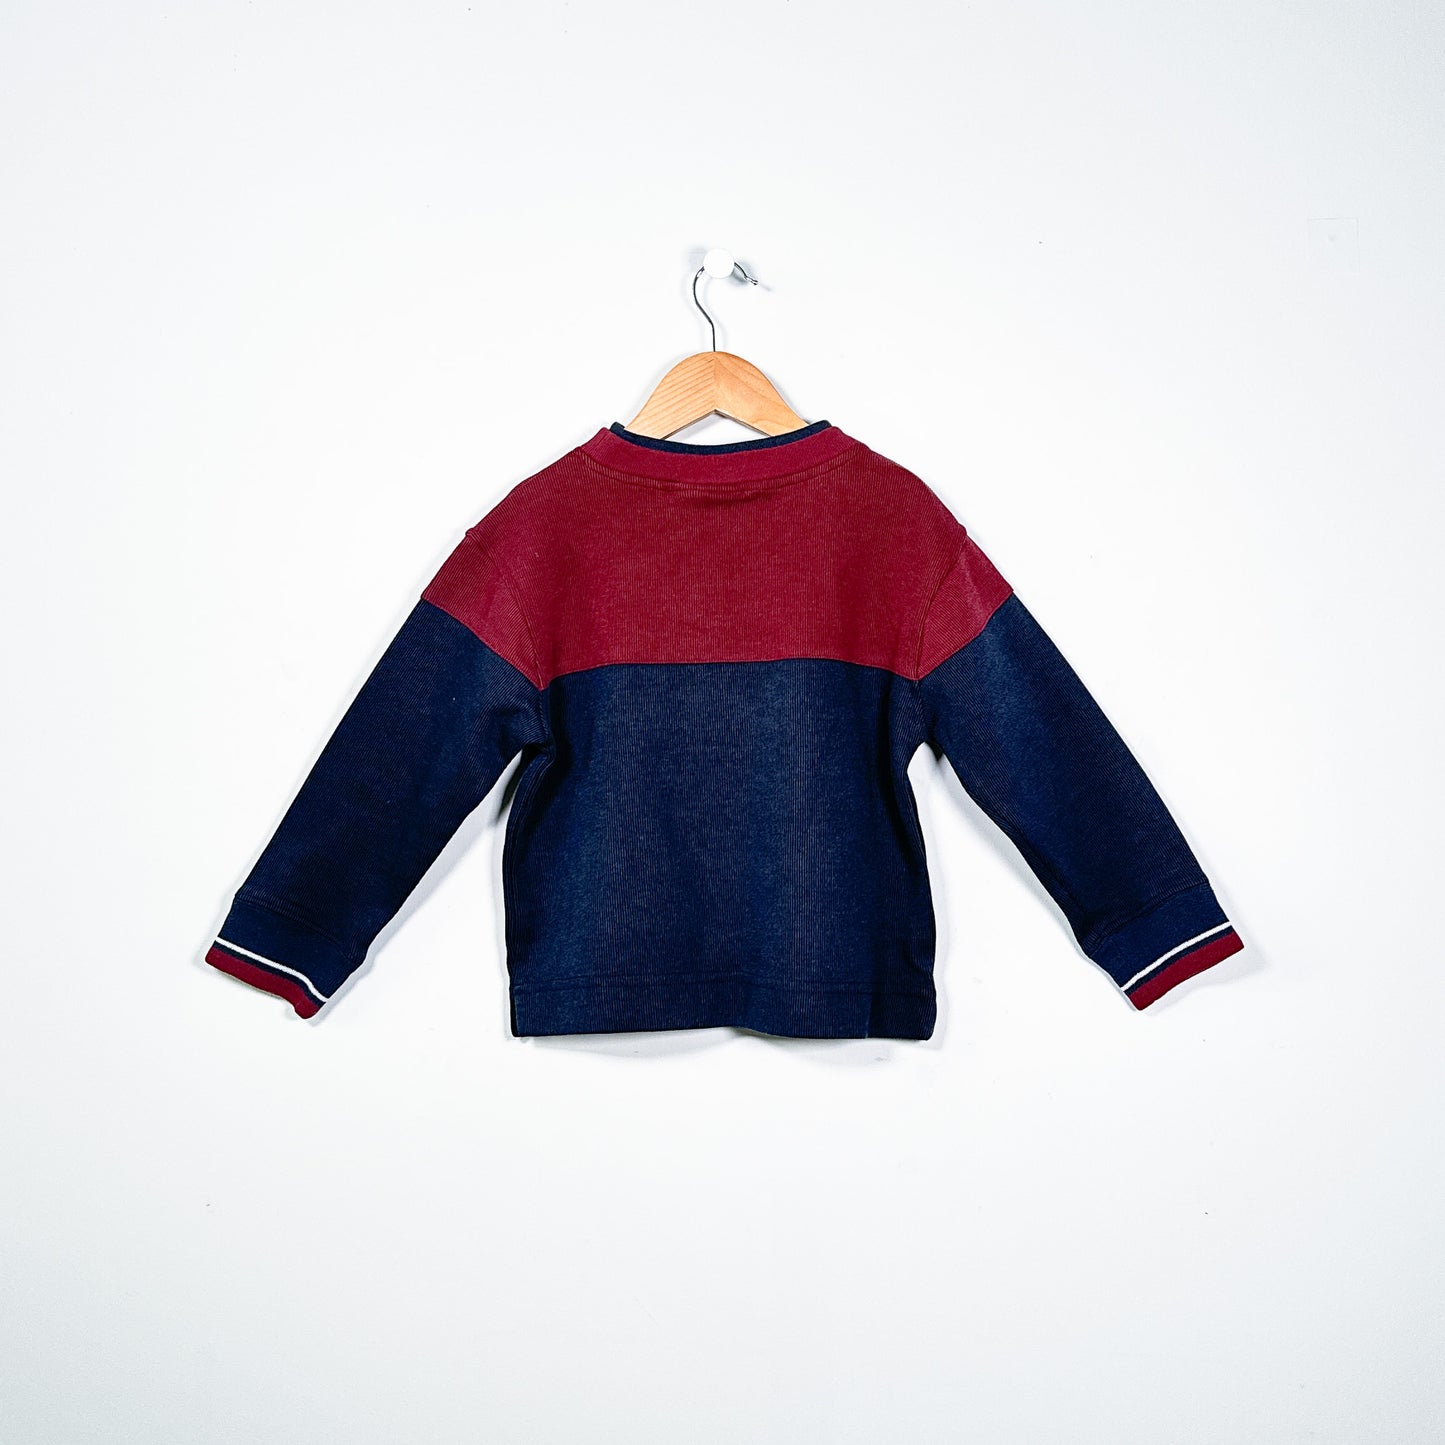 Vintage Kids IZOD Embroidered Sweatshirt - Size 4-5yr